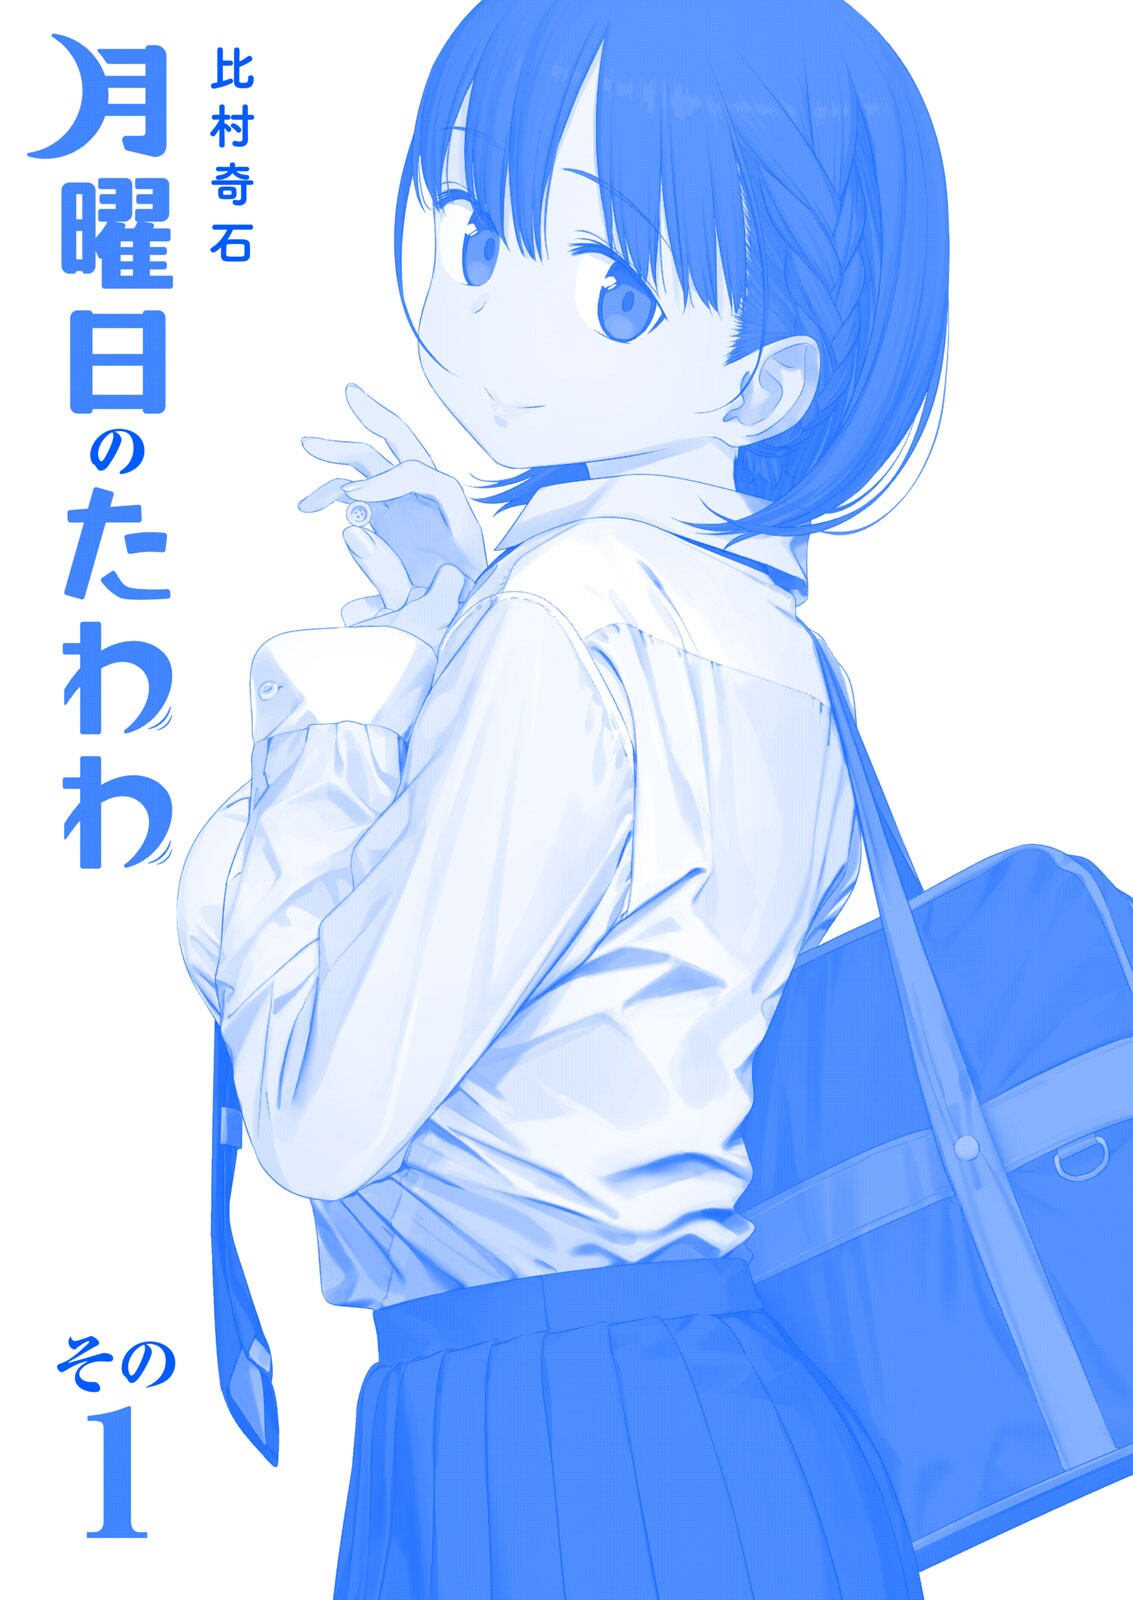 Read Getsuyoubi No Tawawa (Twitter Webcomic) (Fan Colored) Vol.2 Chapter 6:  Part Ii: Bonus - Comiket 90 Special Edition on Mangakakalot